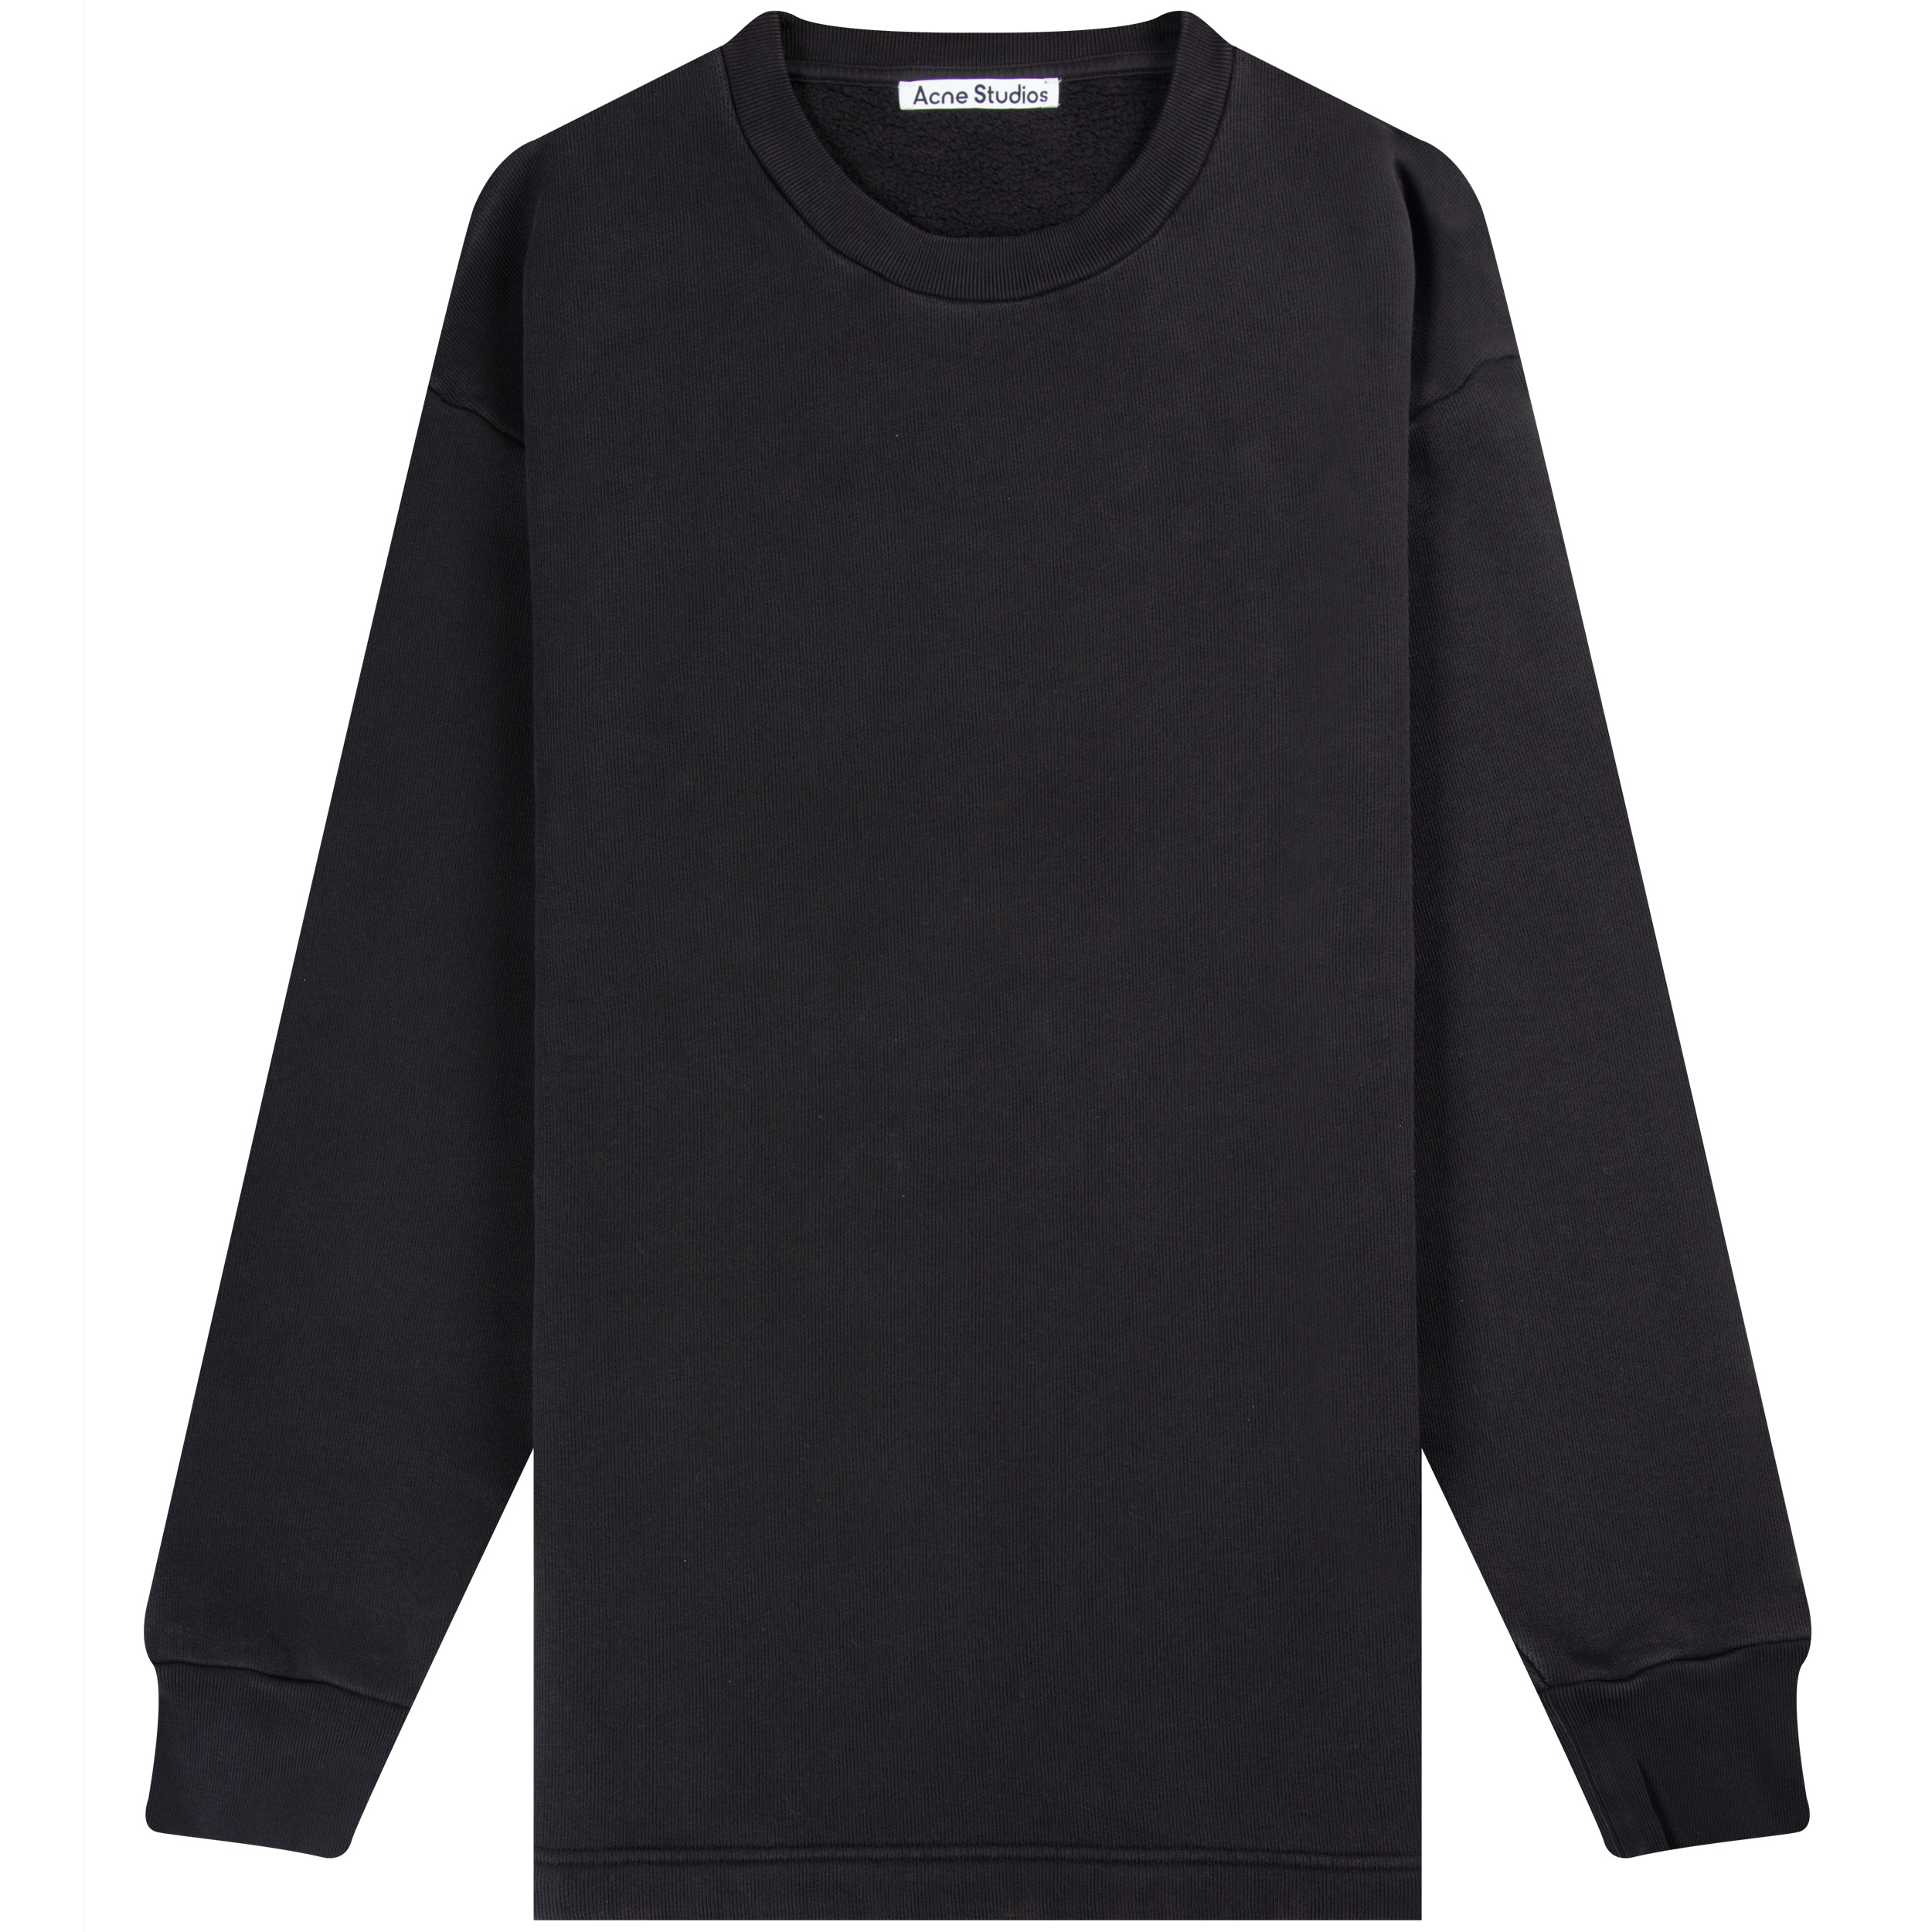 Acne Studios ’Embroidered Text’ Sweatshirt Black